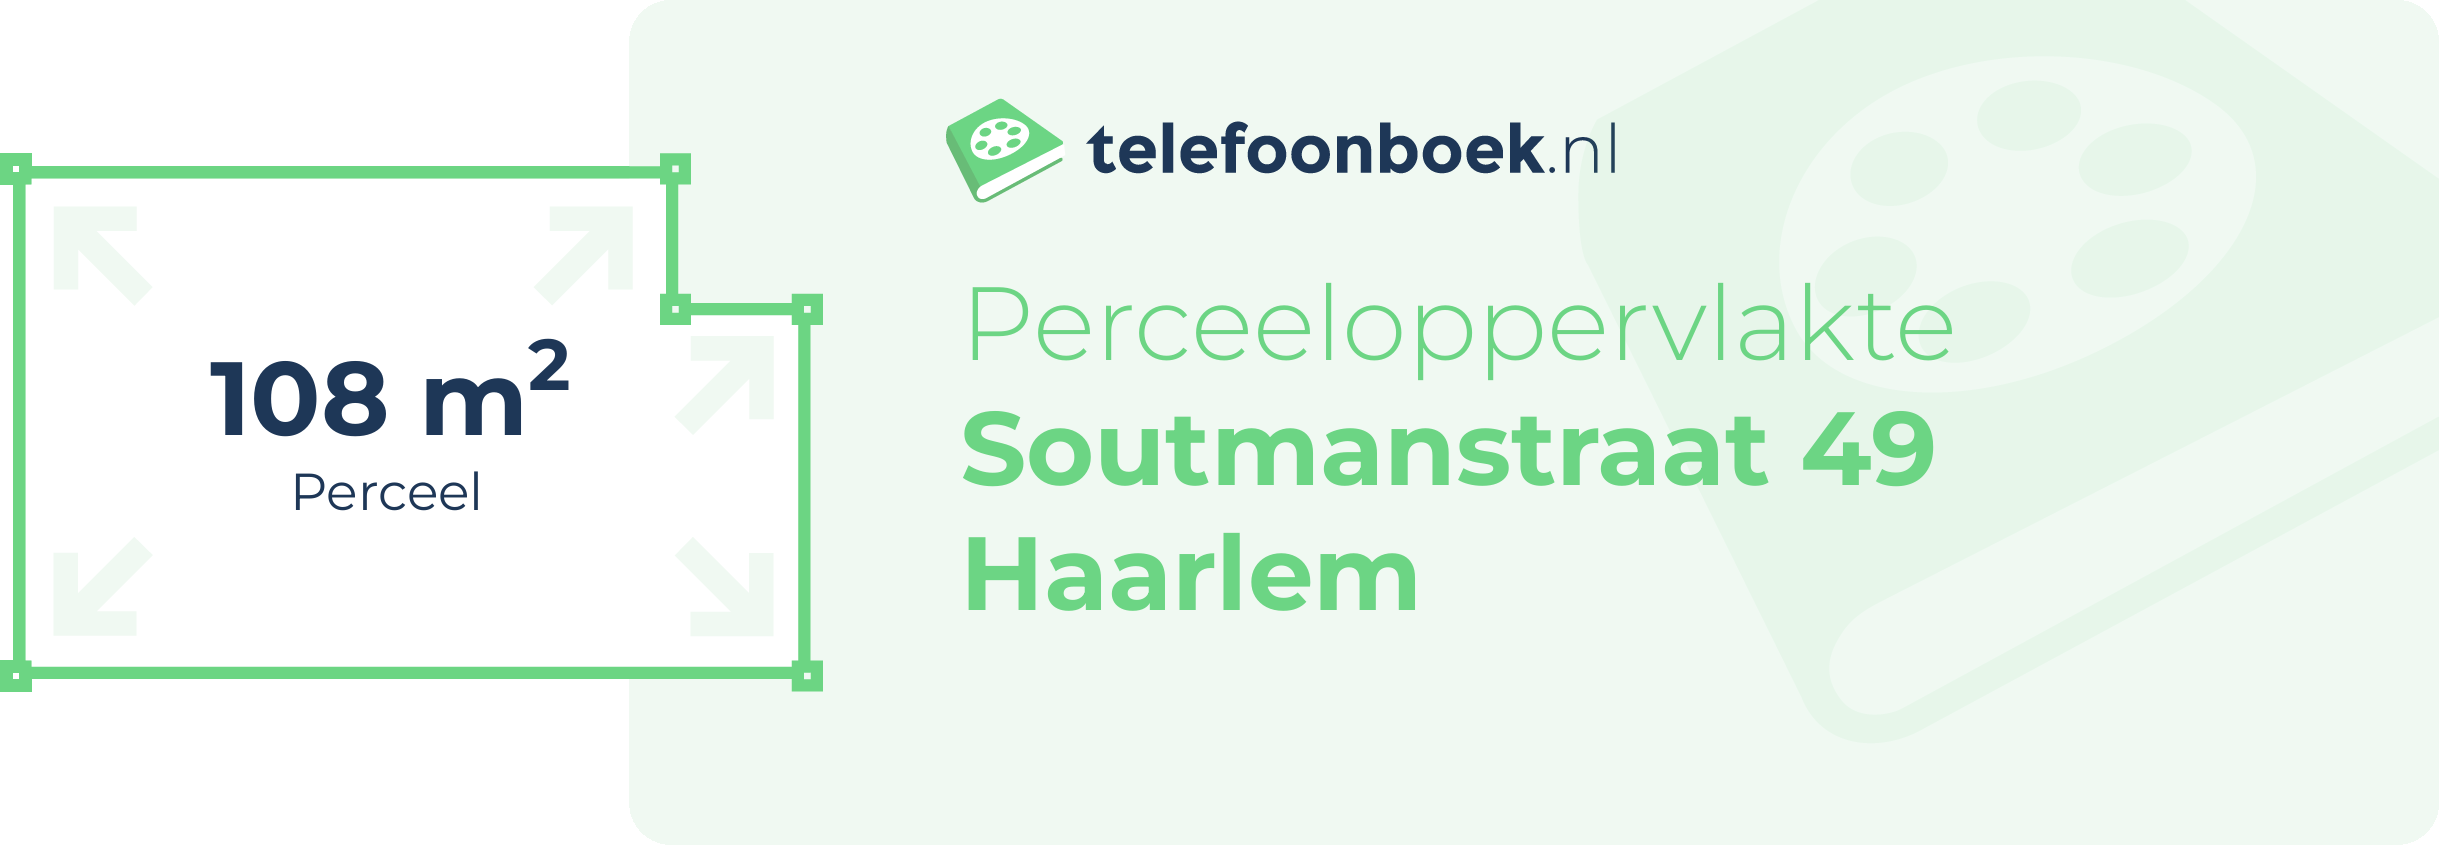 Perceeloppervlakte Soutmanstraat 49 Haarlem